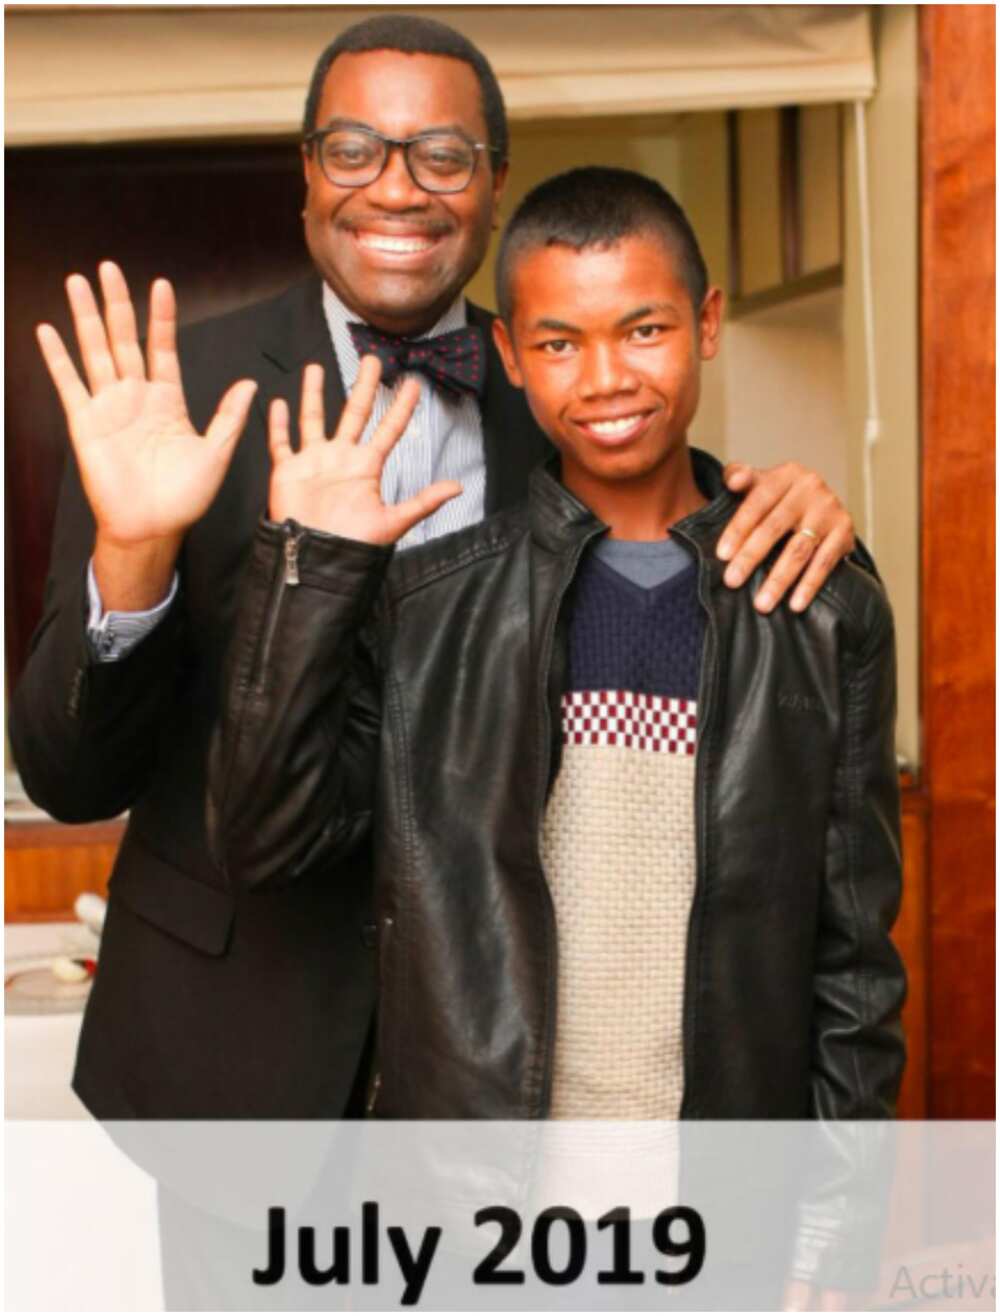 Akinwumi Adesina: Beautiful transformation photos of boy from Madagascar adopted by ADB president